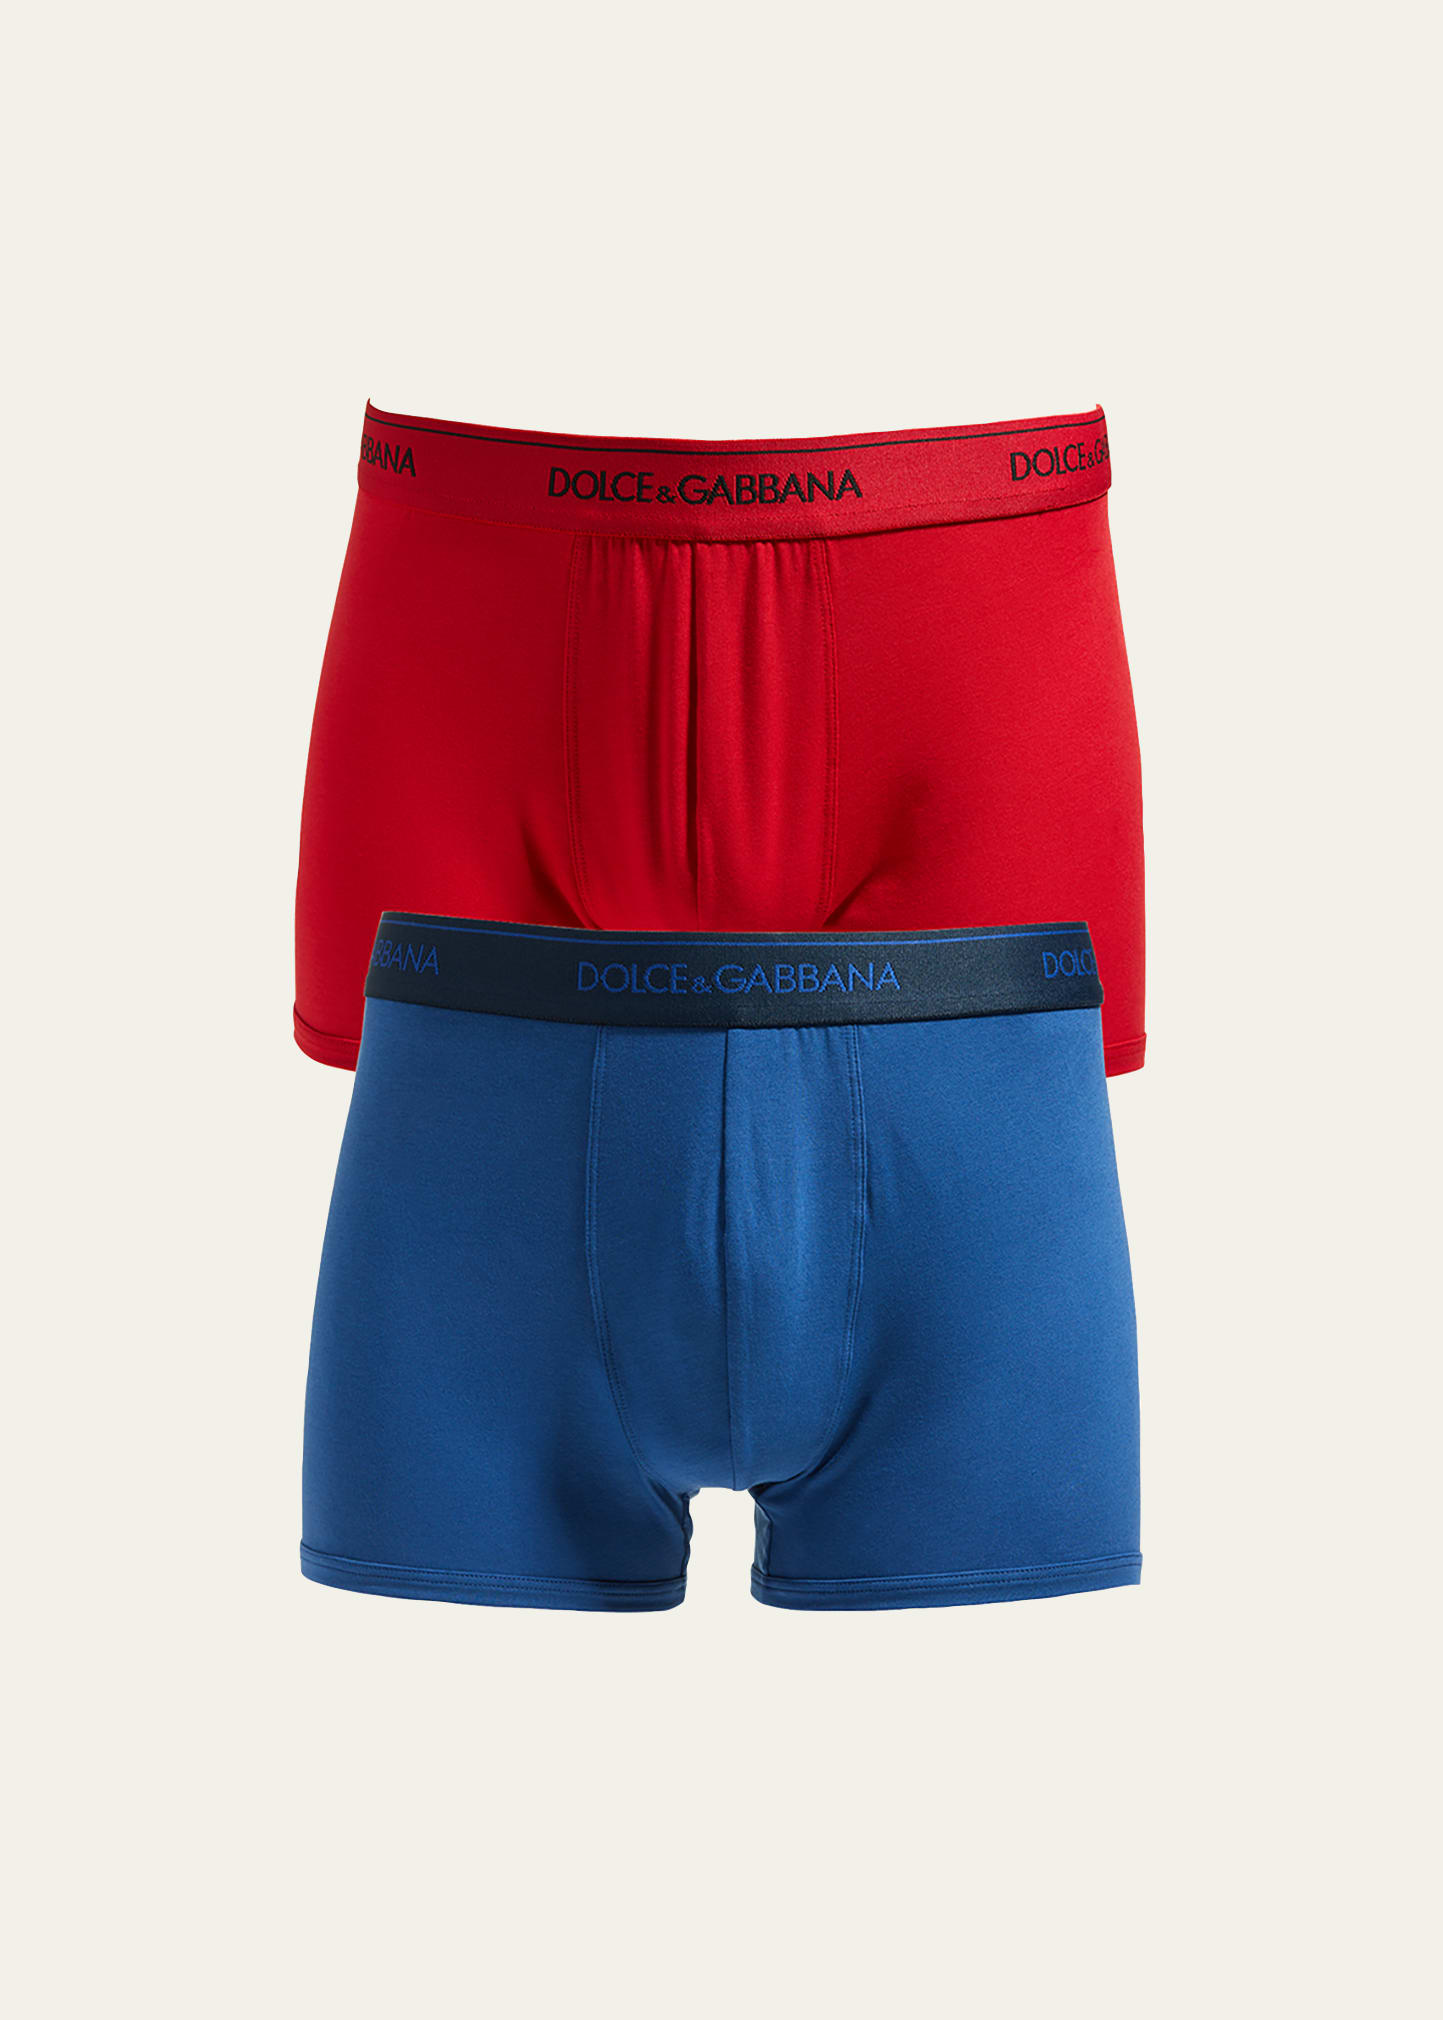 Dolce & Gabbana Men's 2-pack Logo Boxer Briefs In Red/blue